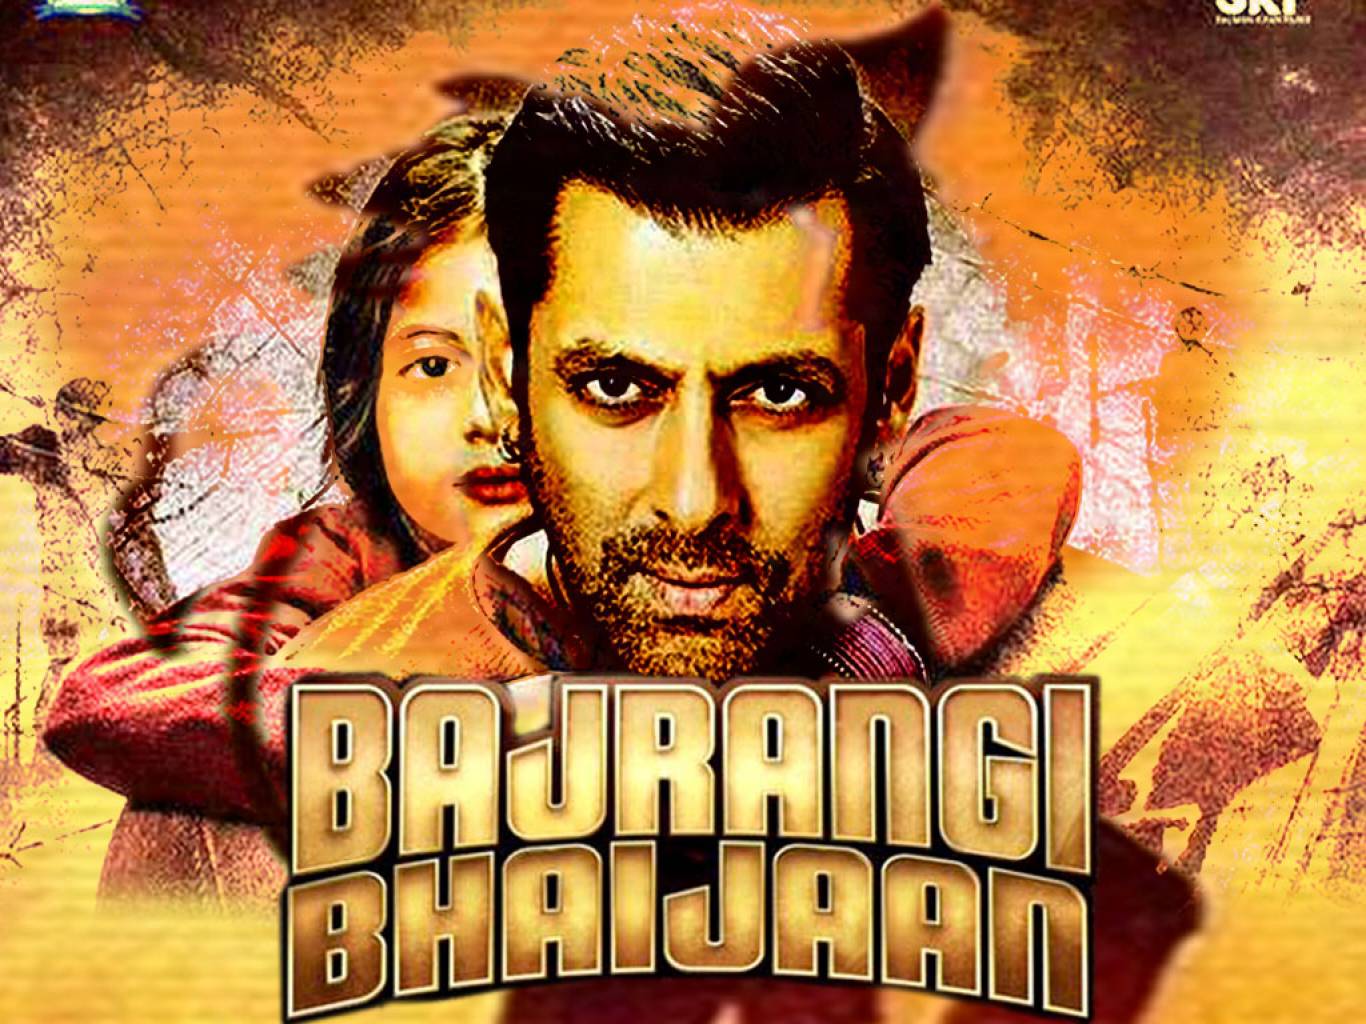 full movie download bajrangi bhaijan